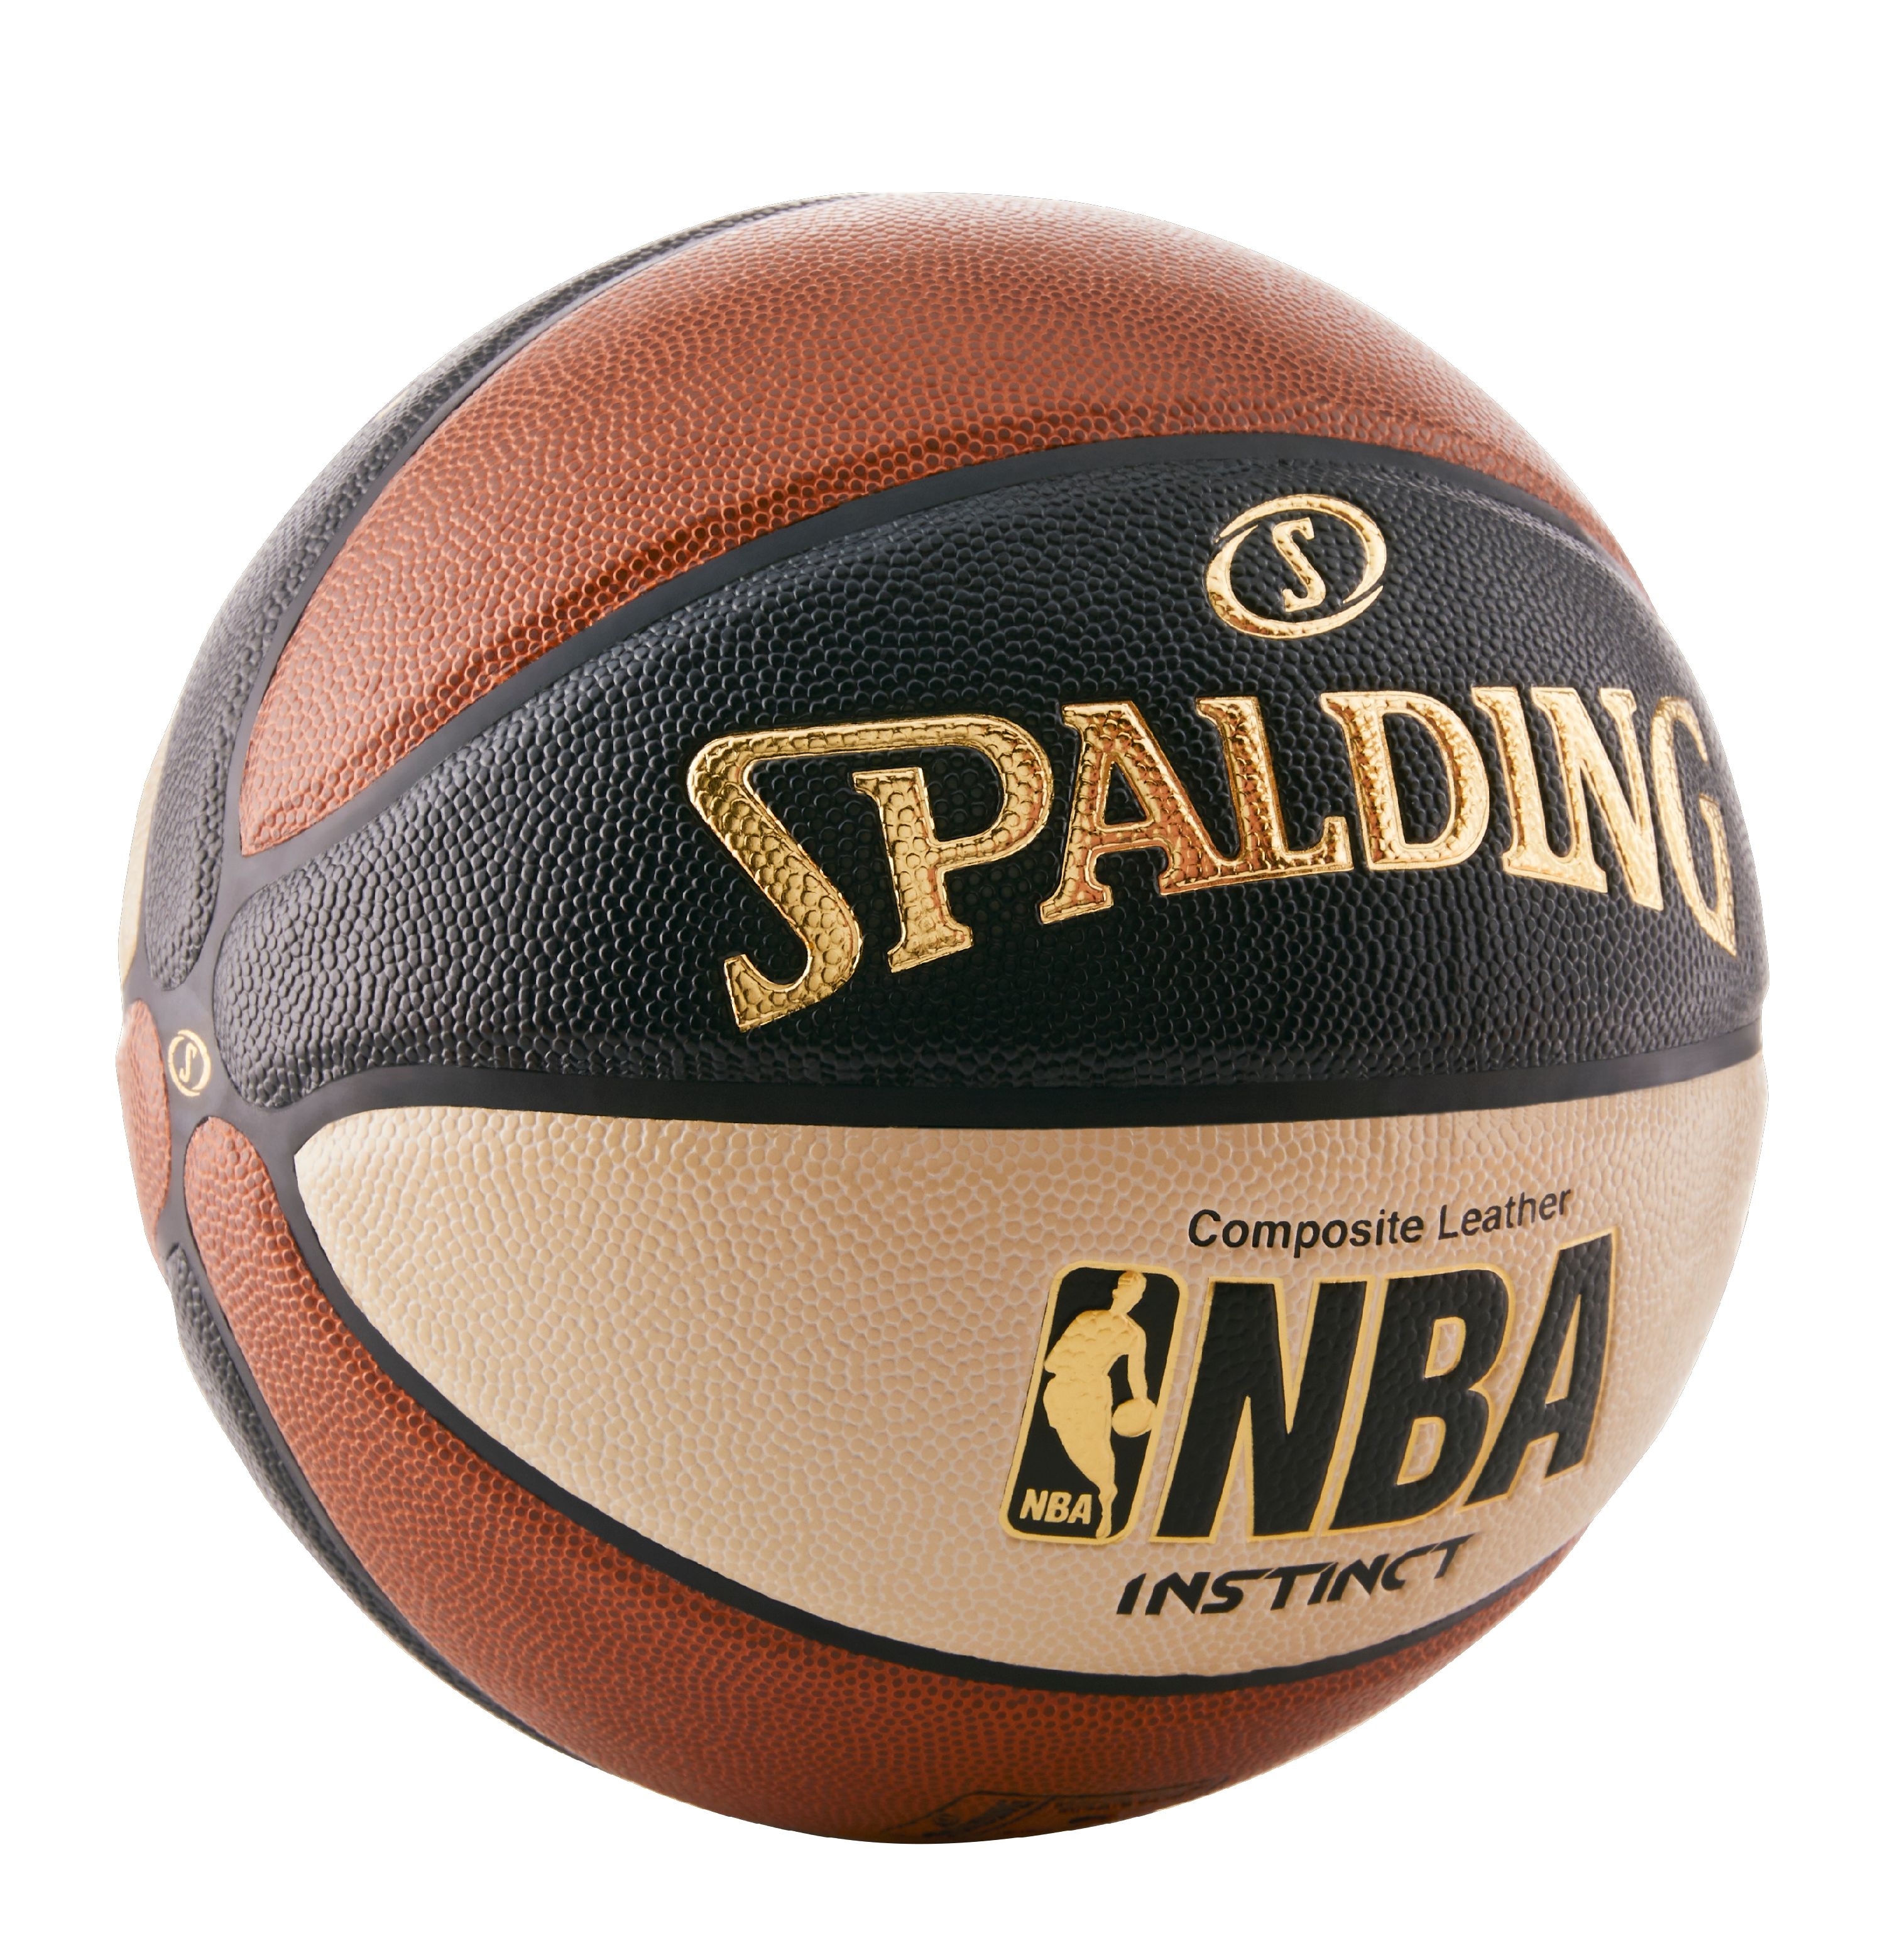 Spalding NBA Instinct 29.5" Basketball - image 3 of 4